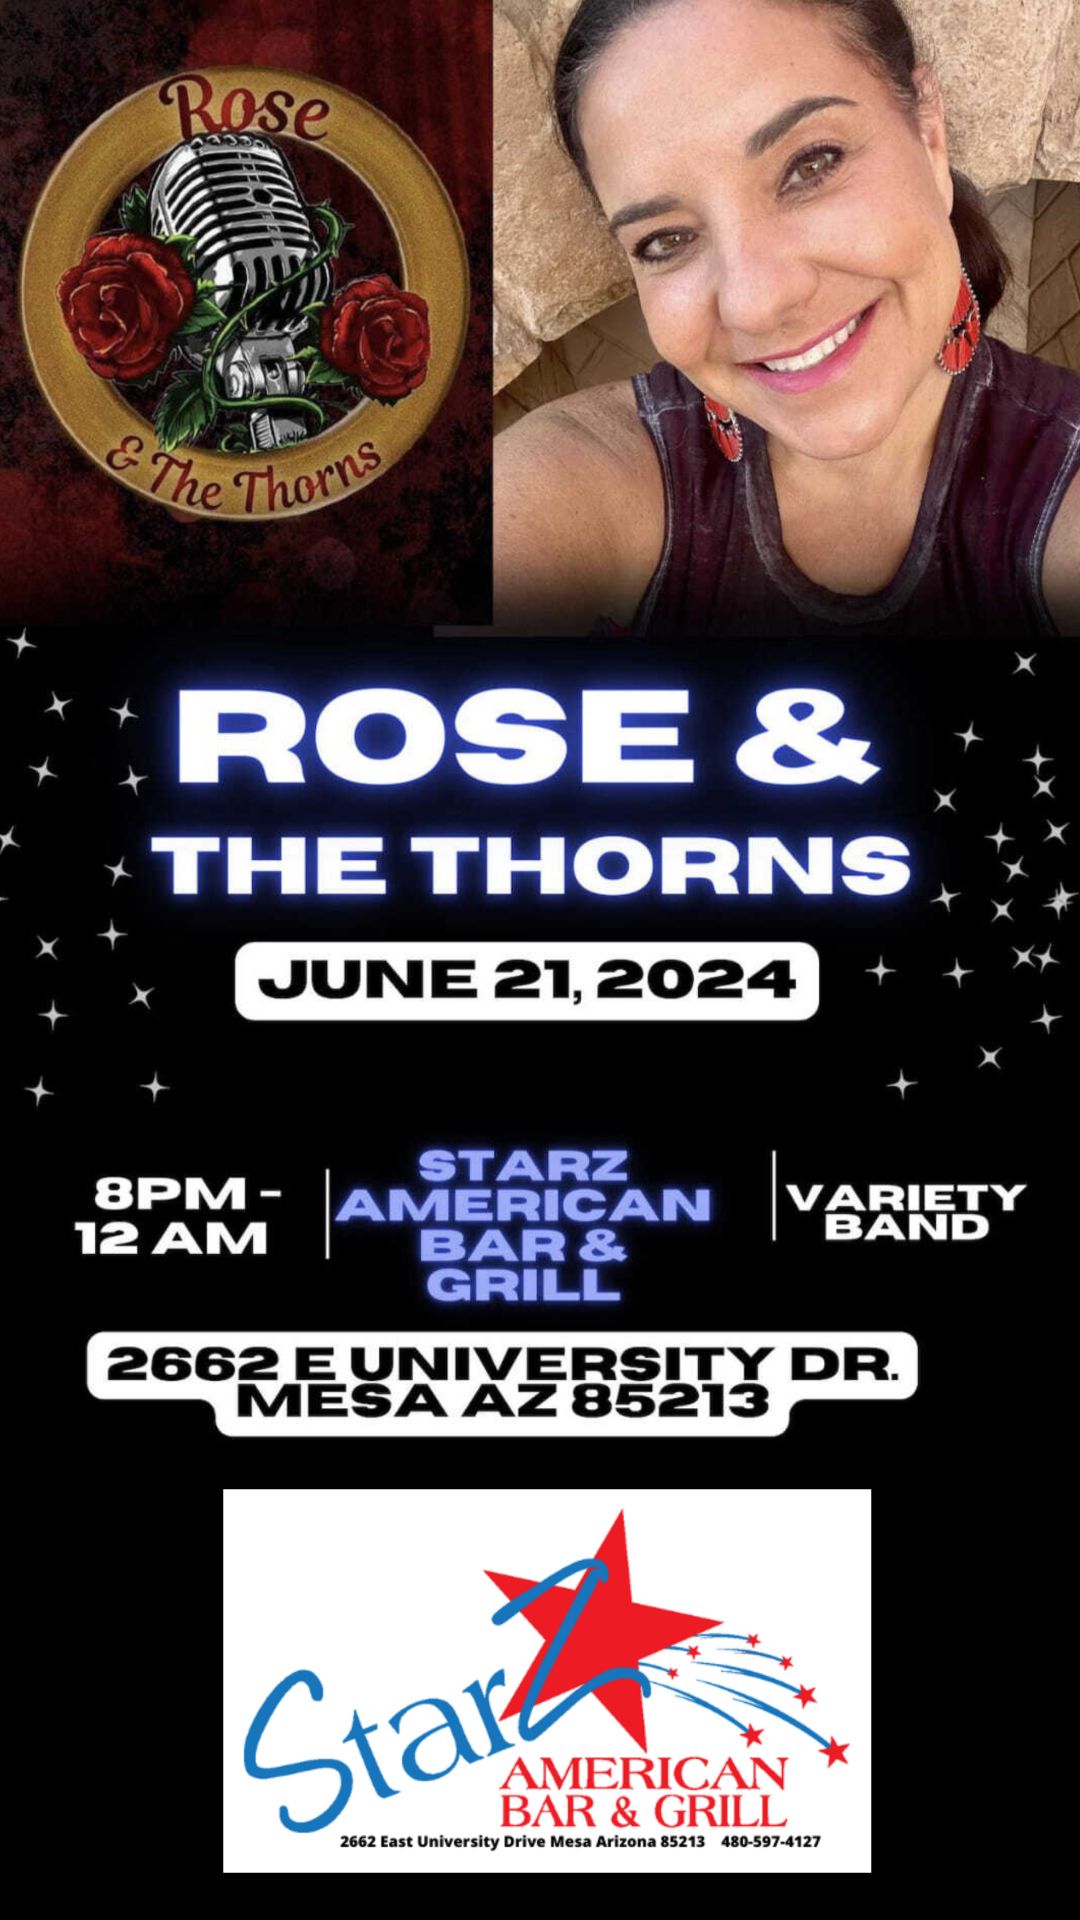 ROSE & THE THORNS @ StarZ!